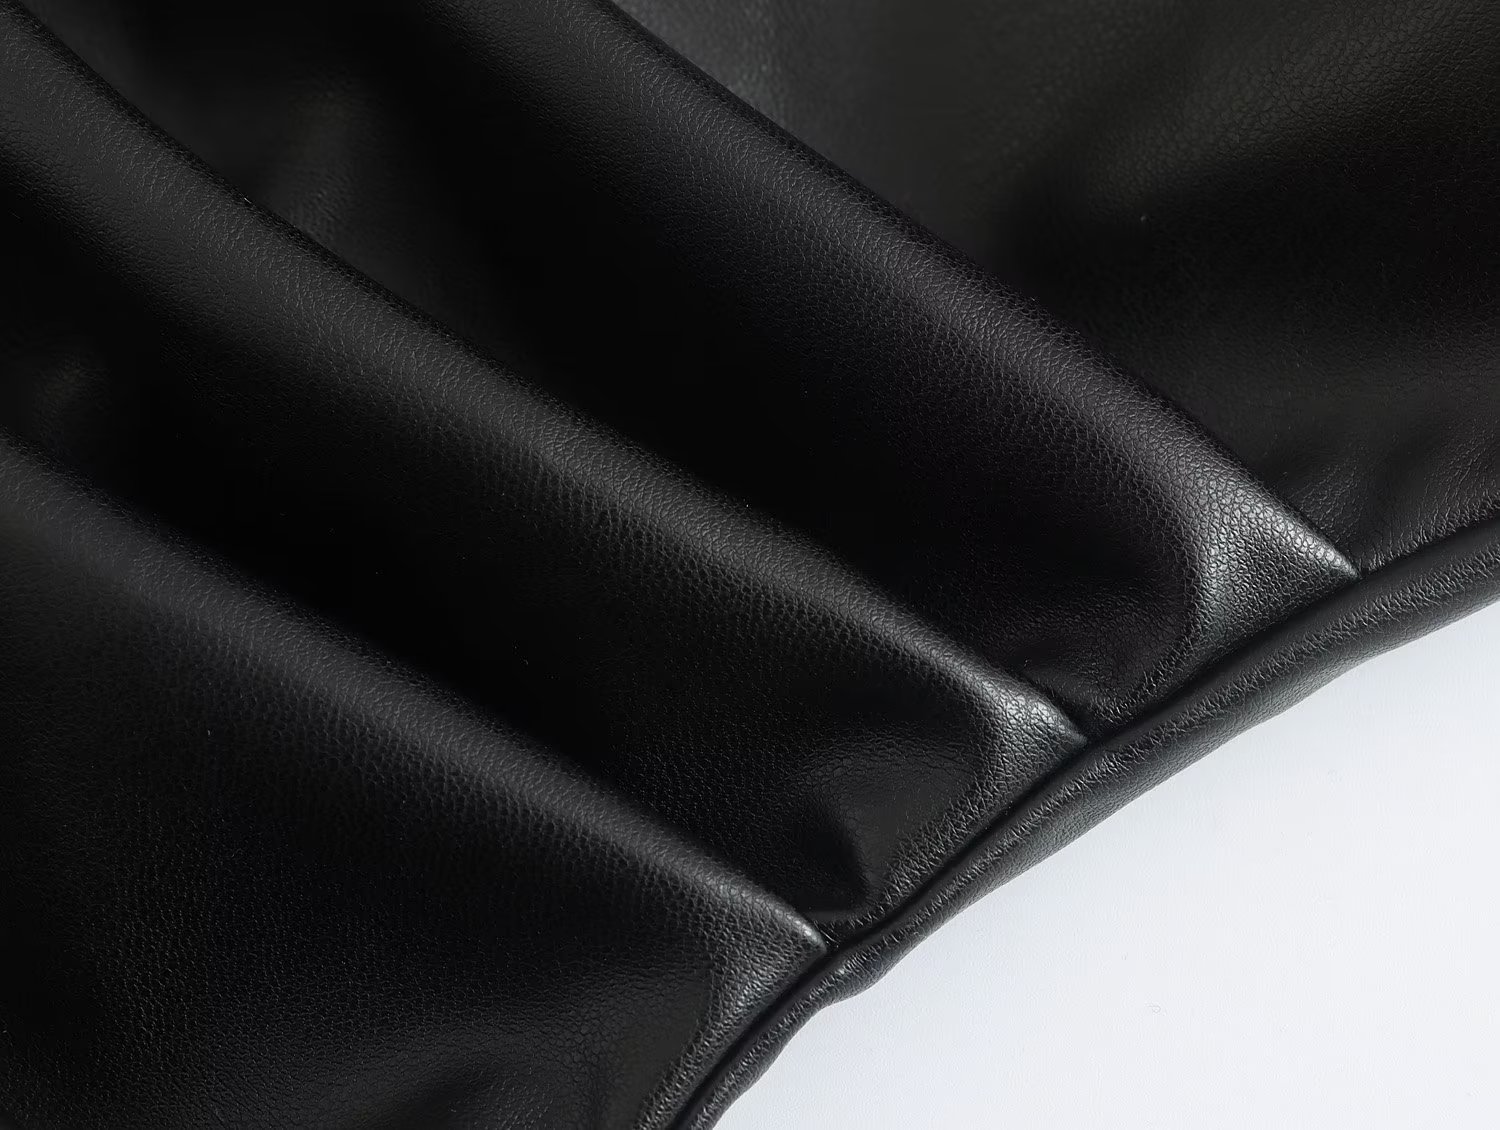  Black Faux Leather Bodycon Dress For Women